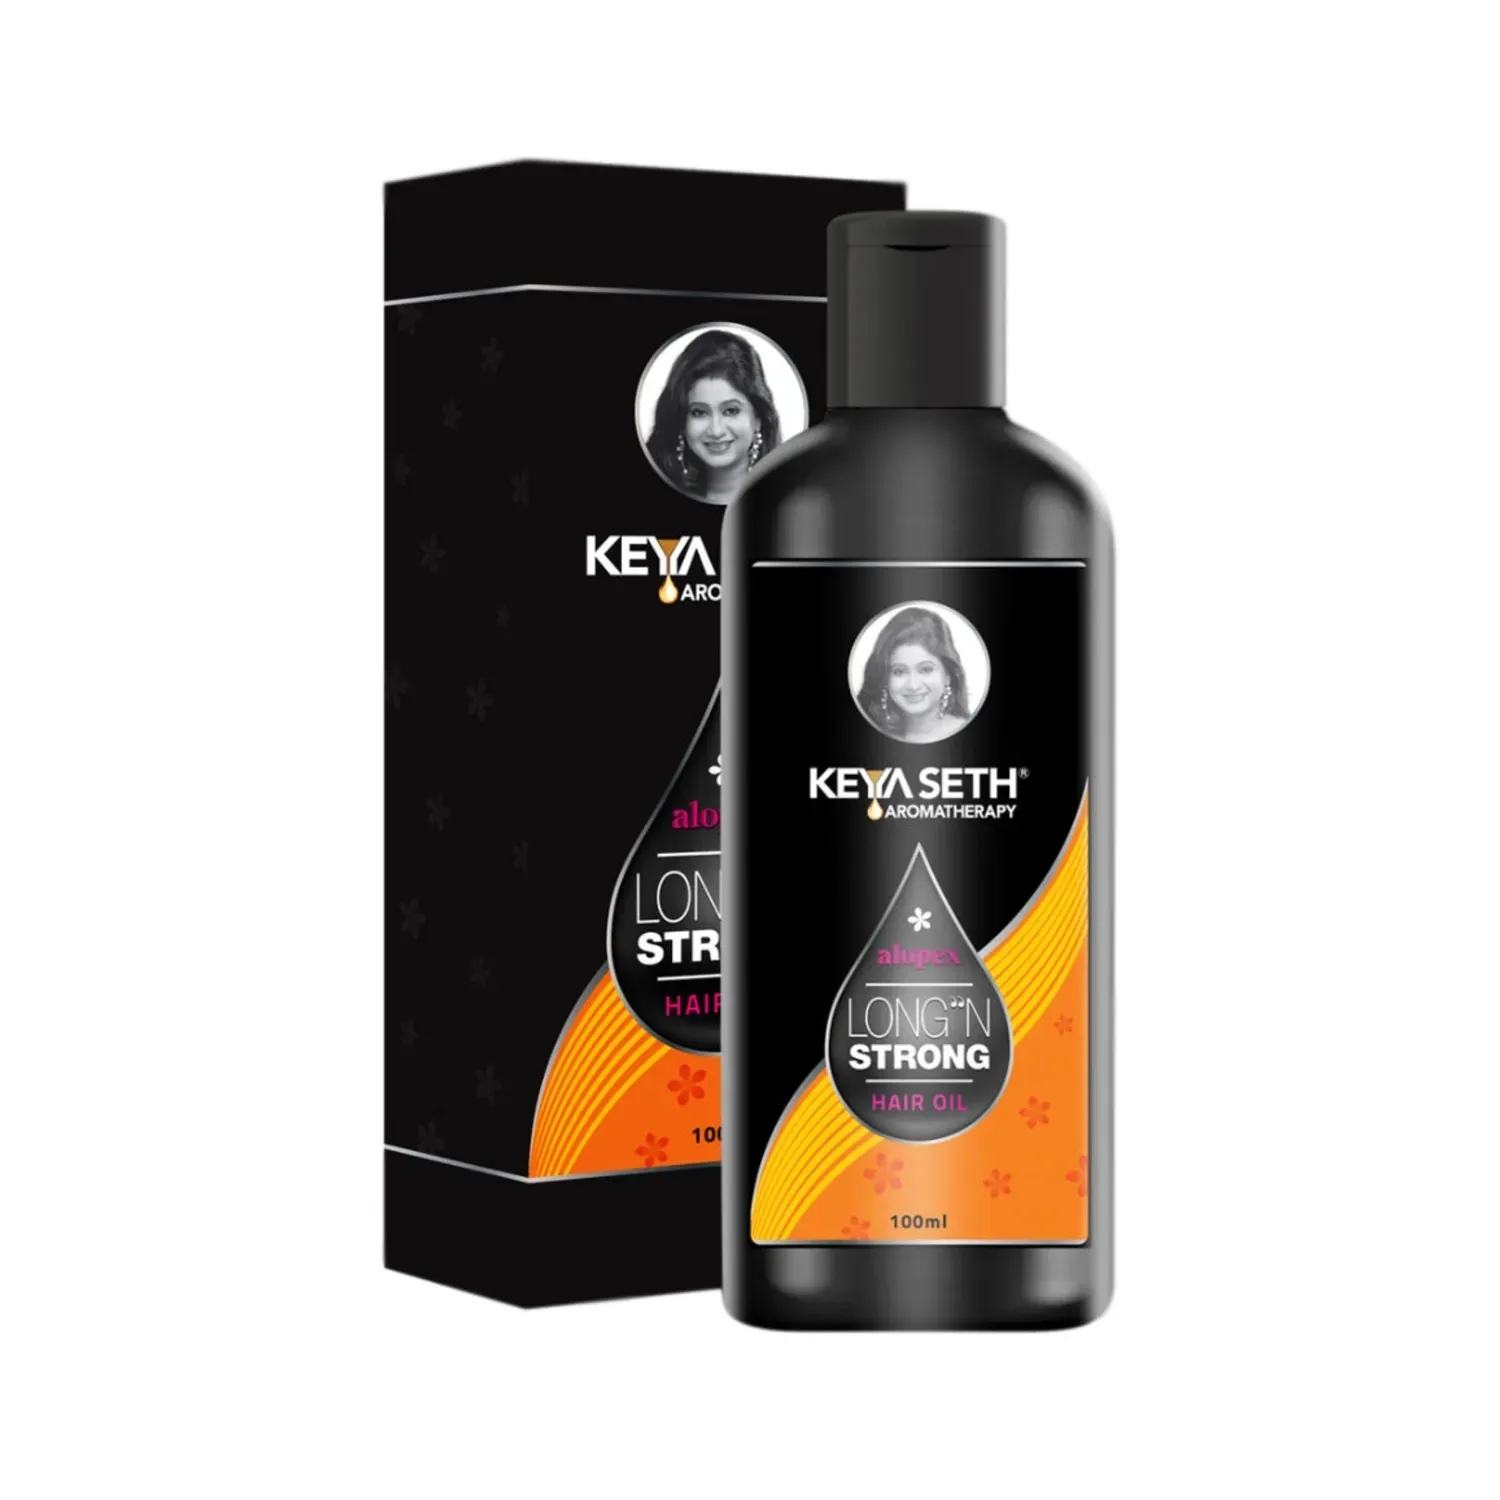 Keya Seth Aromatherapy Alopex Long N Strong Hair Oil (100ml)